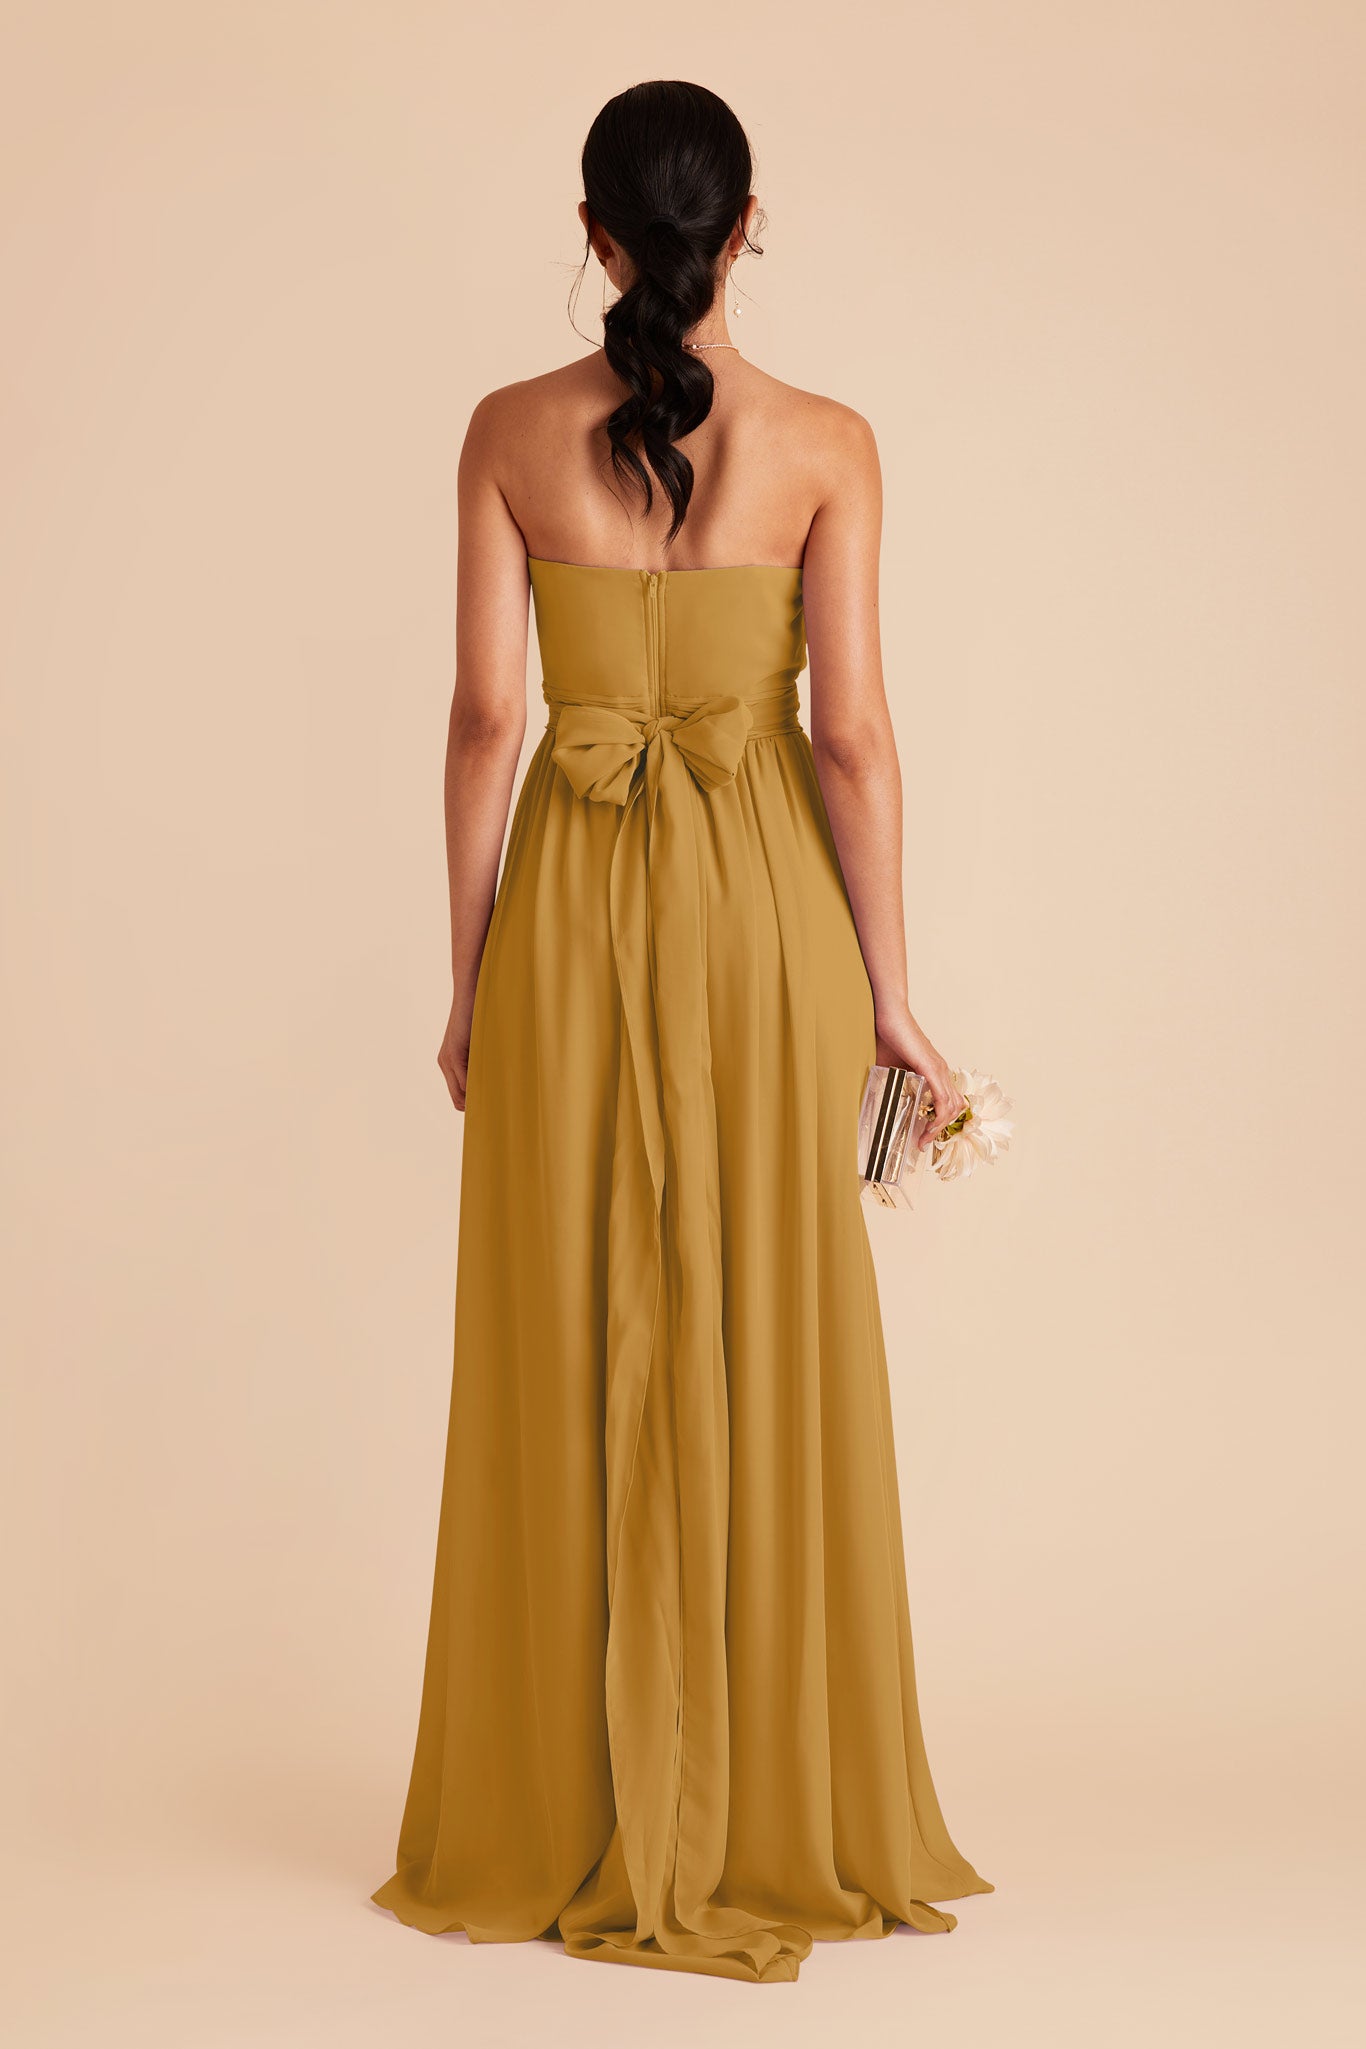 Marigold Grace Convertible Dress by Birdy Grey